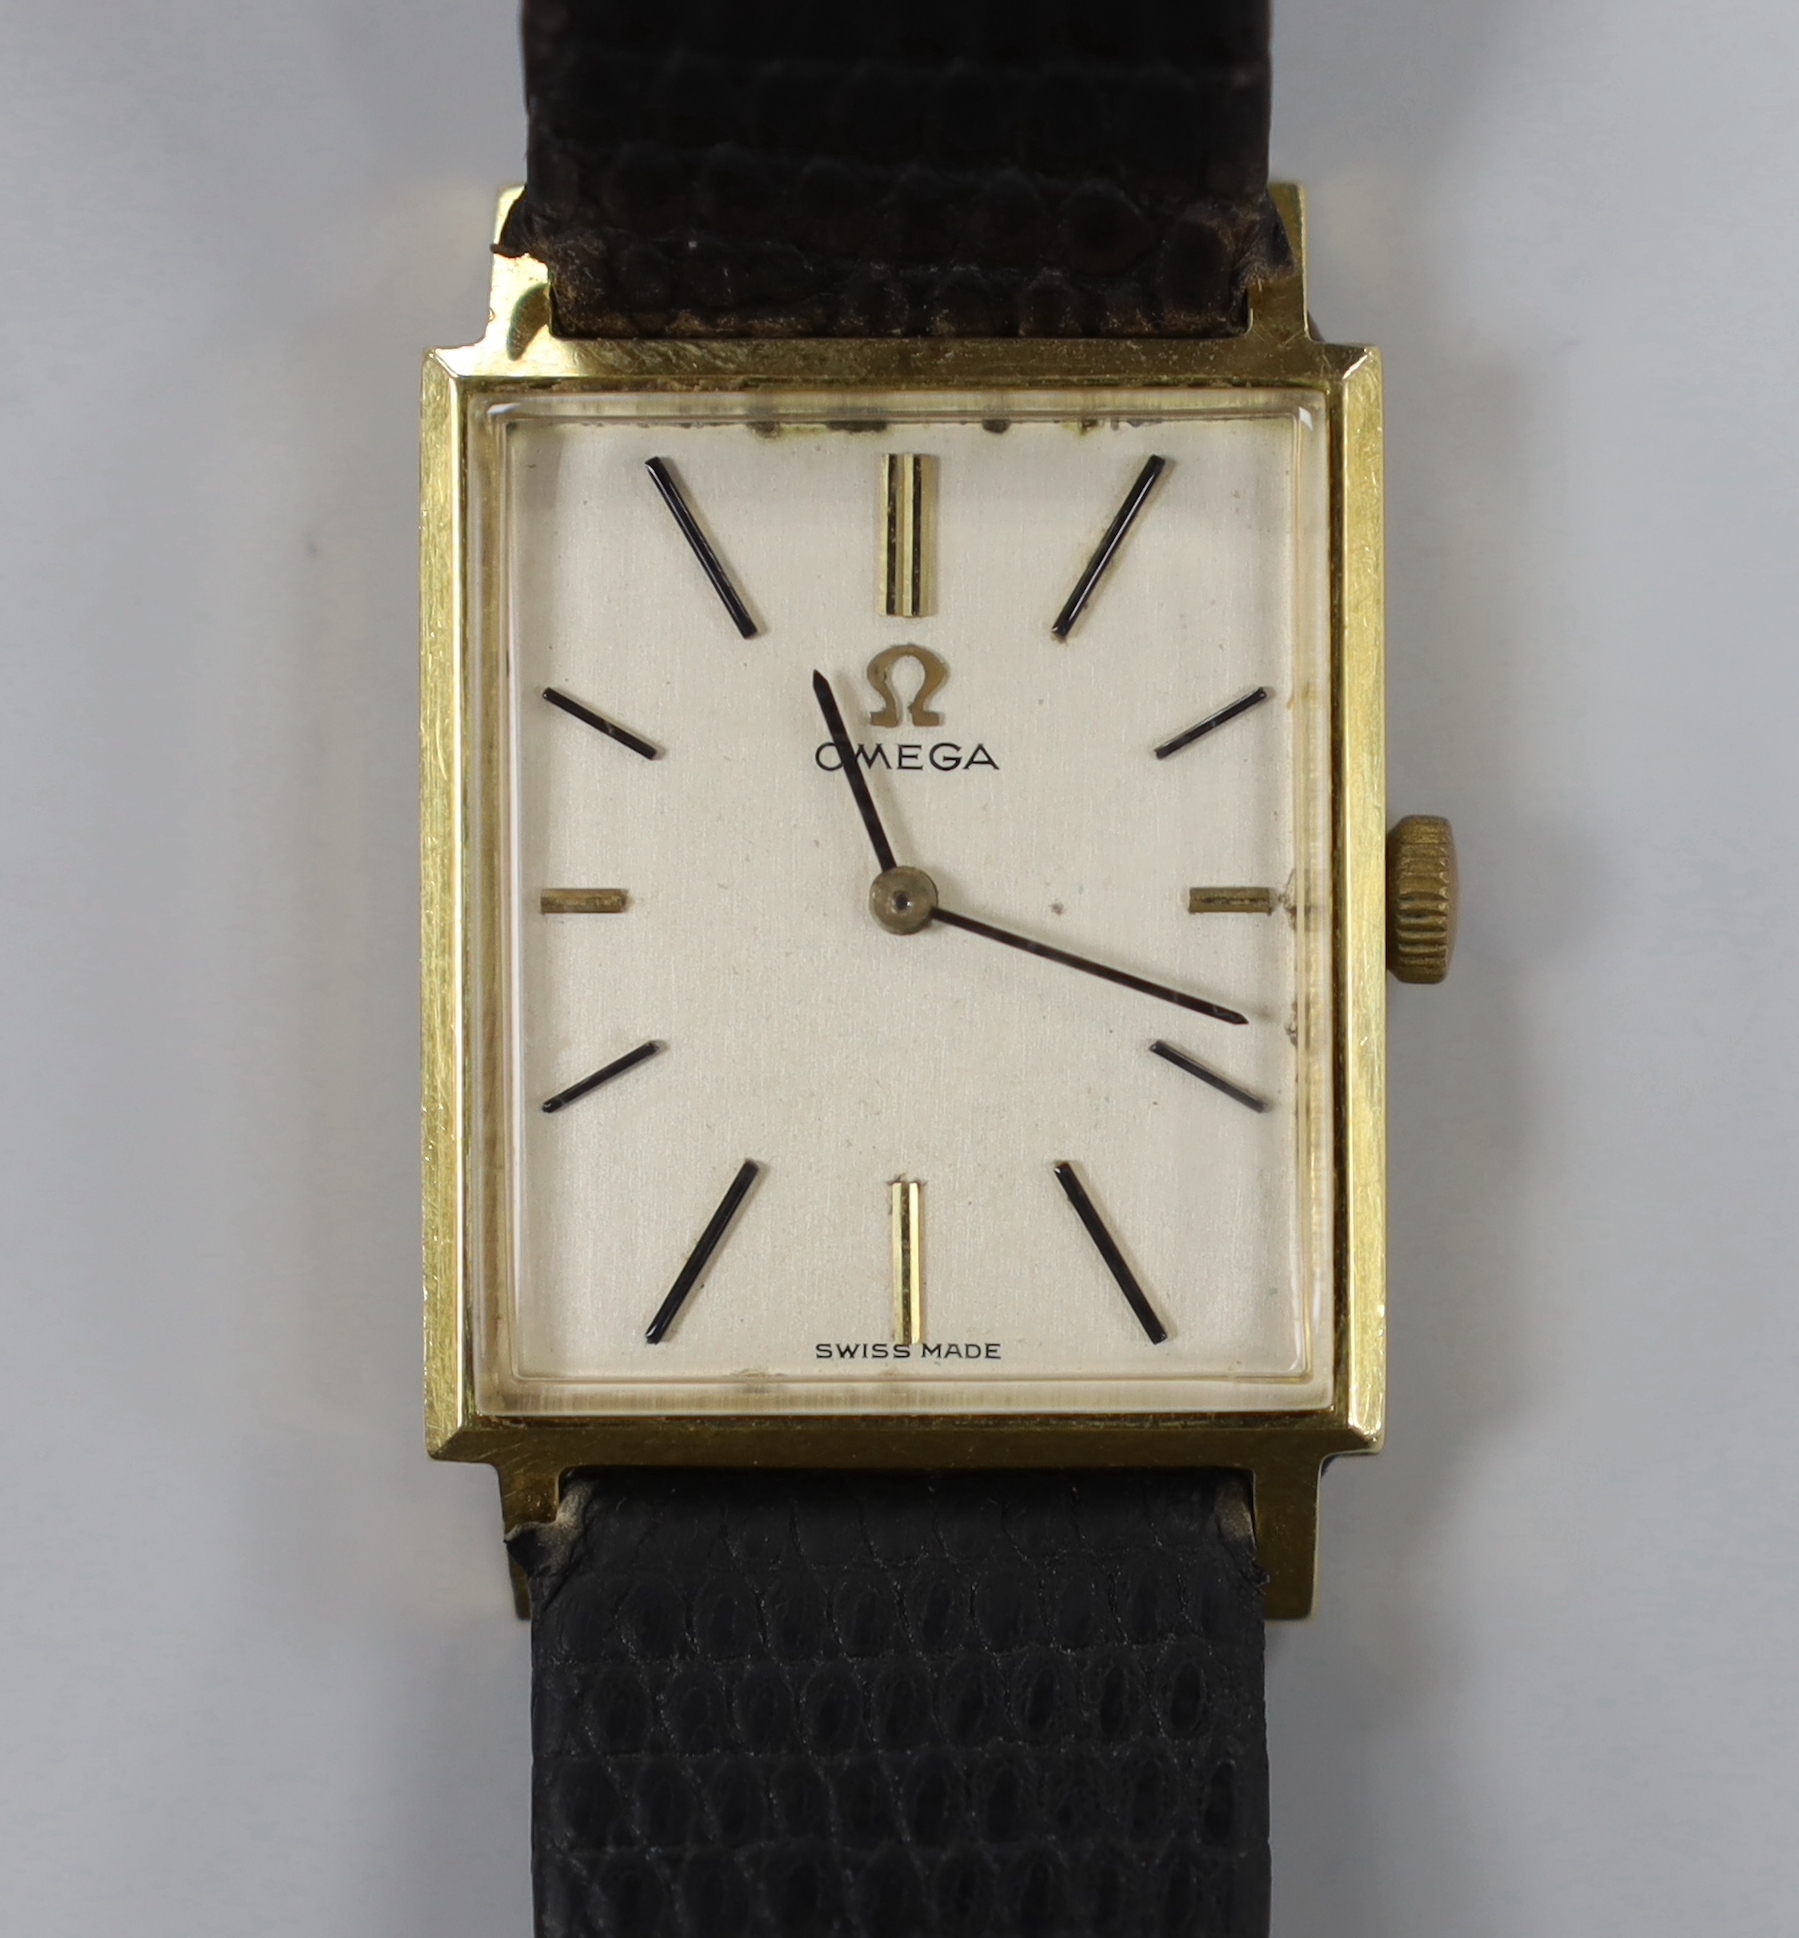 A gentleman's 18k Omega manual wind rectangular dress wrist watch, on associated leather strap, case